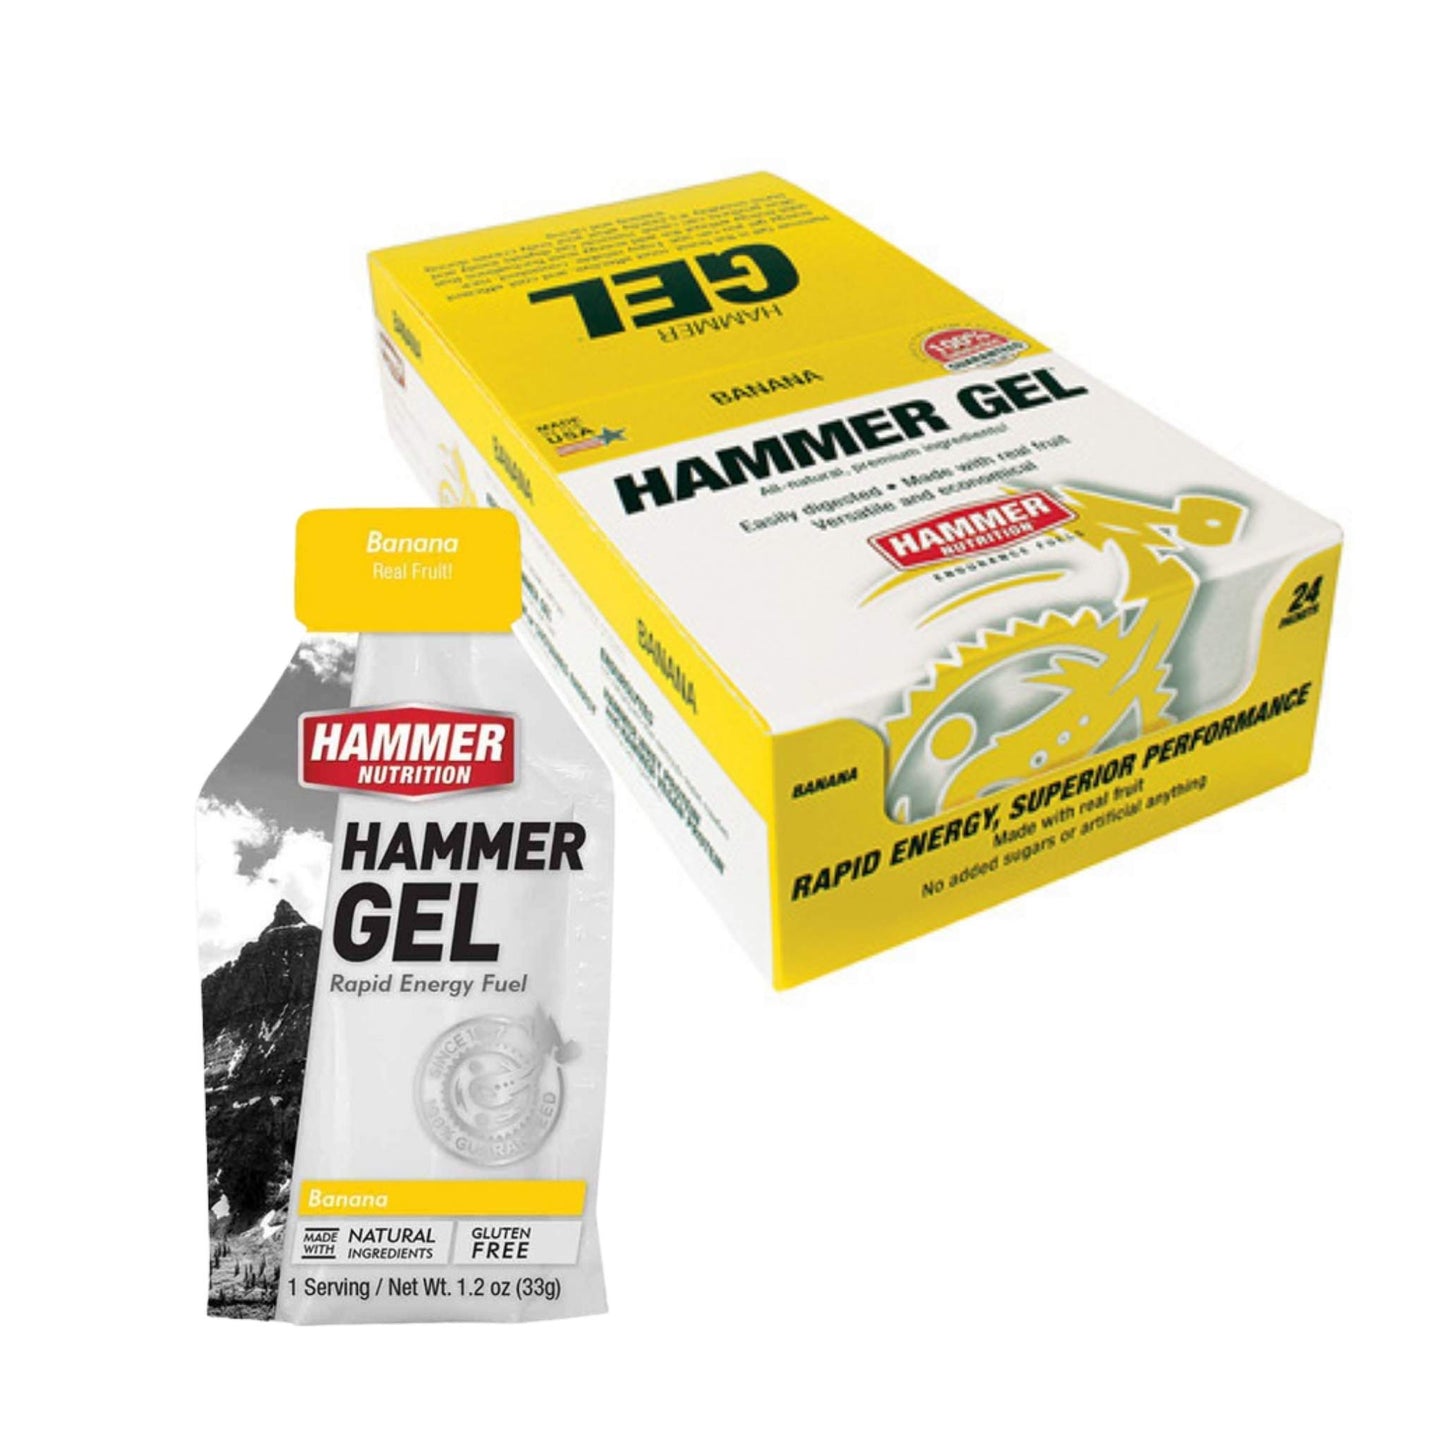 Hammer Nutrition Endurance Gel, Box of 24, Banana, Team Perfect